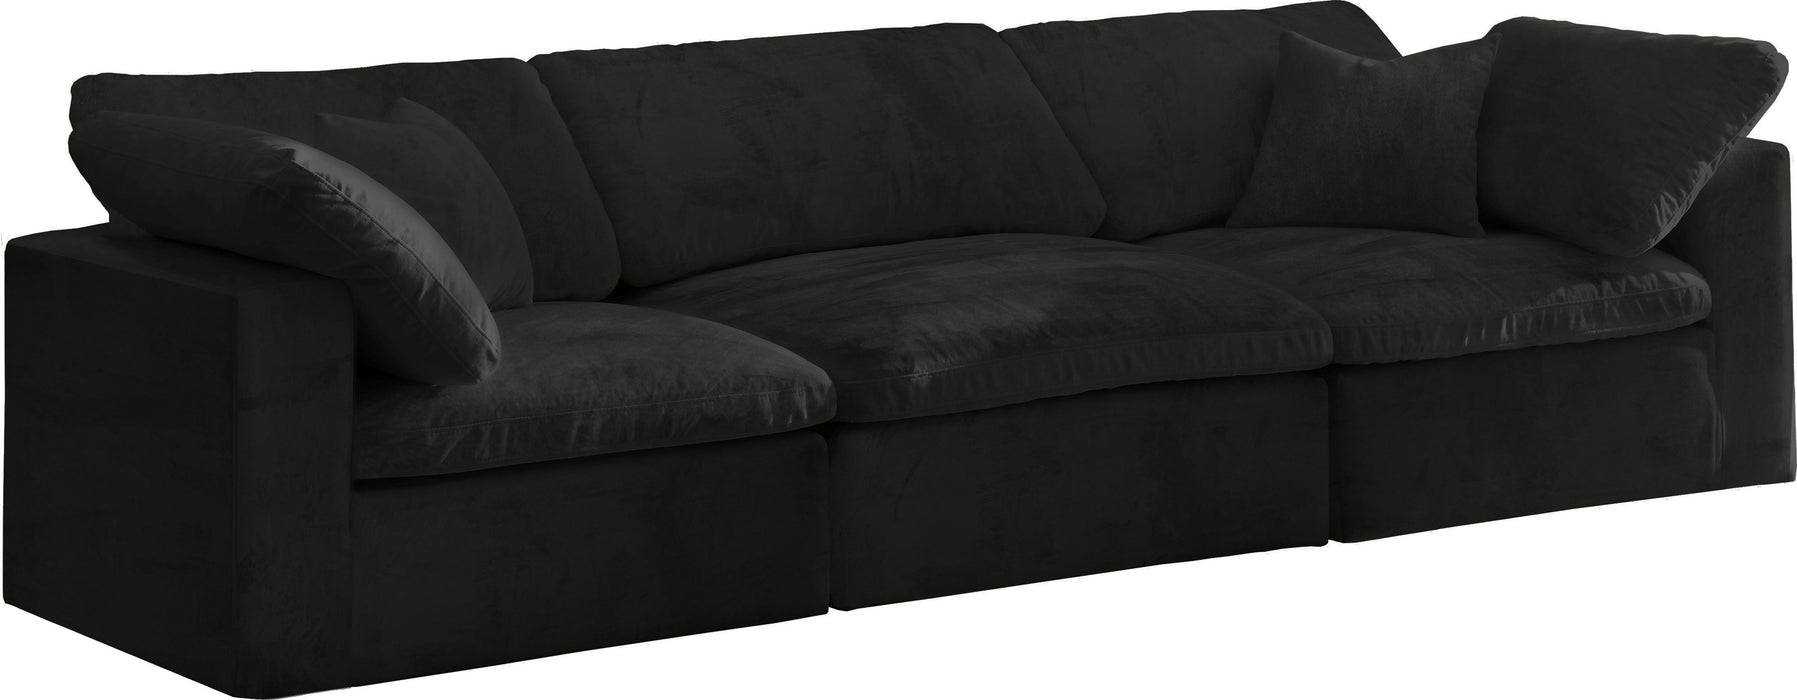 Cozy Black Velvet Cloud Modular Sofa image